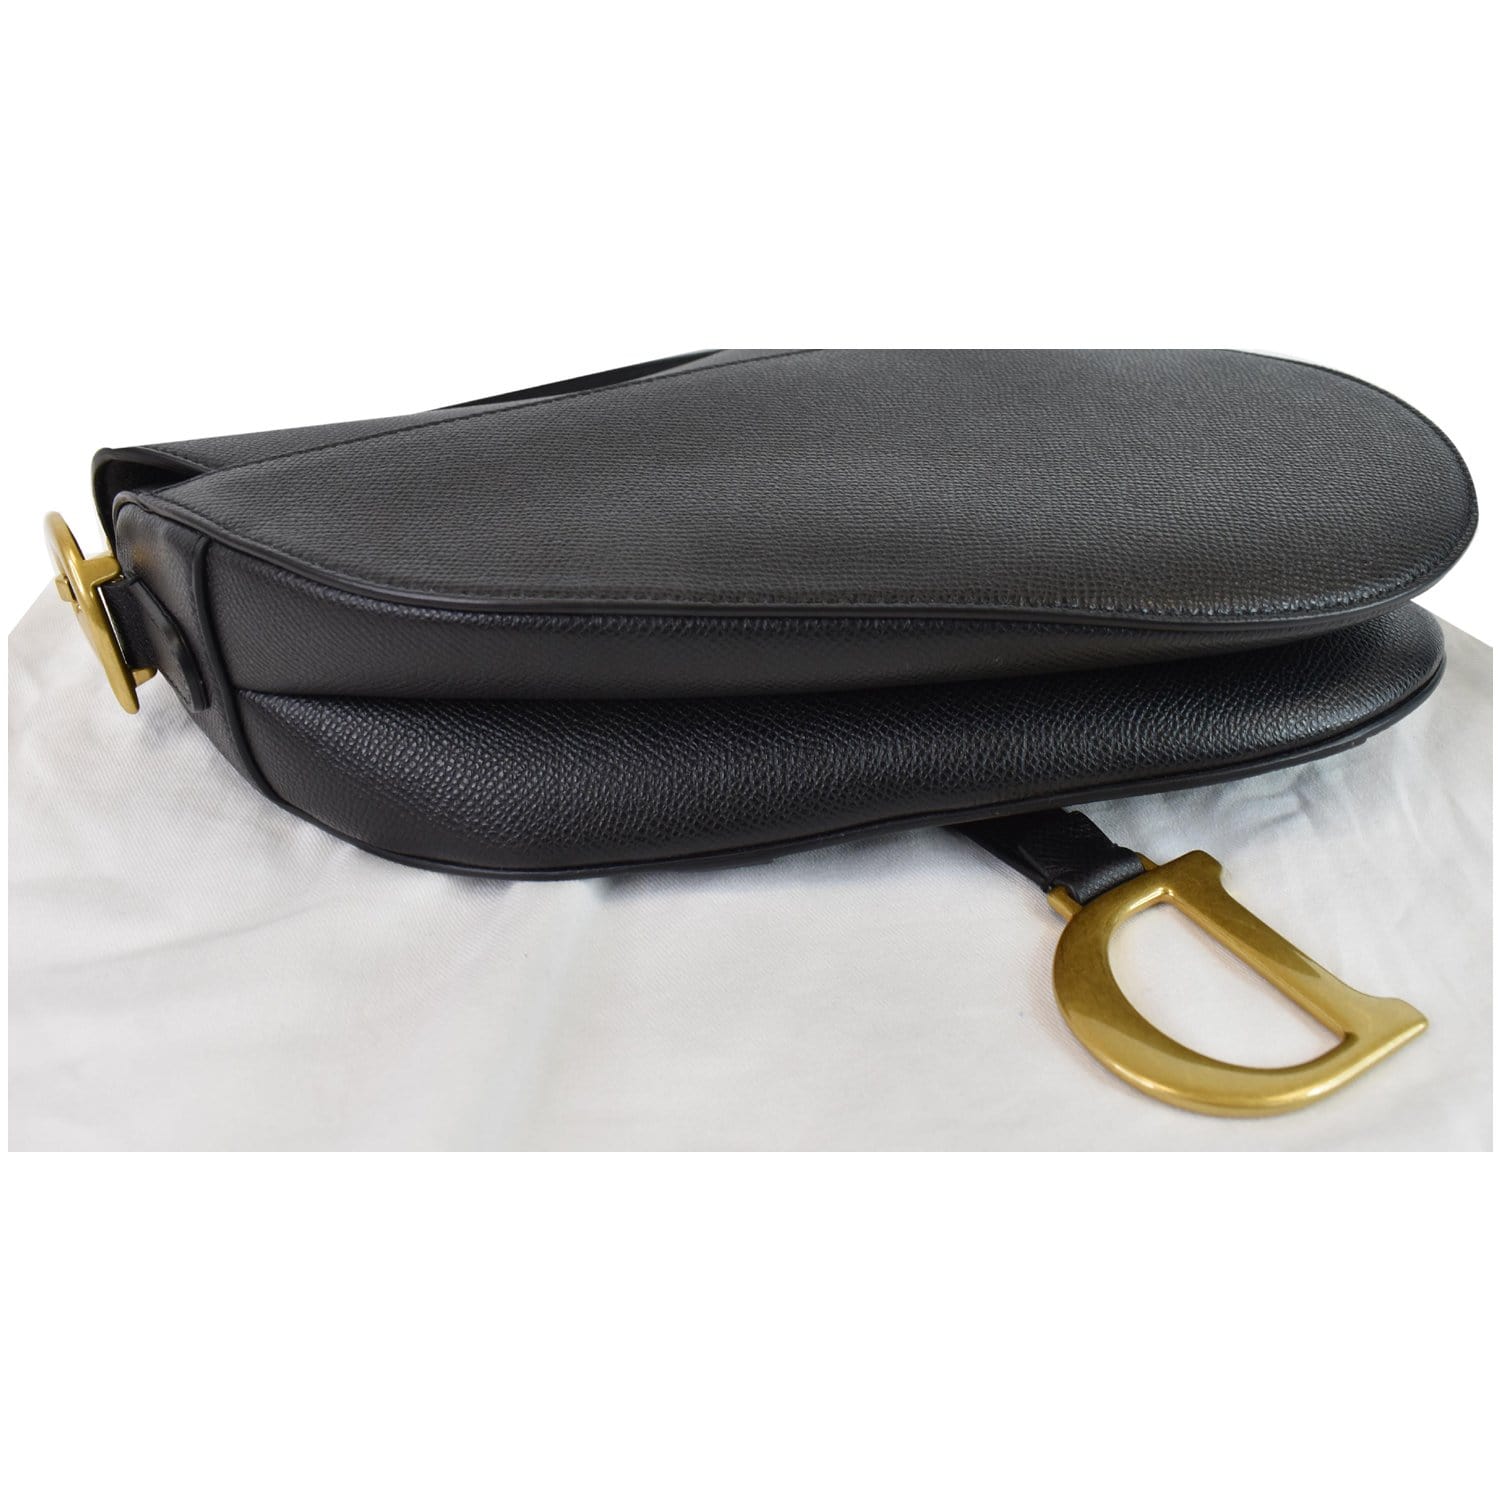 Dior Saddle Black Bags & Handbags for Women for sale